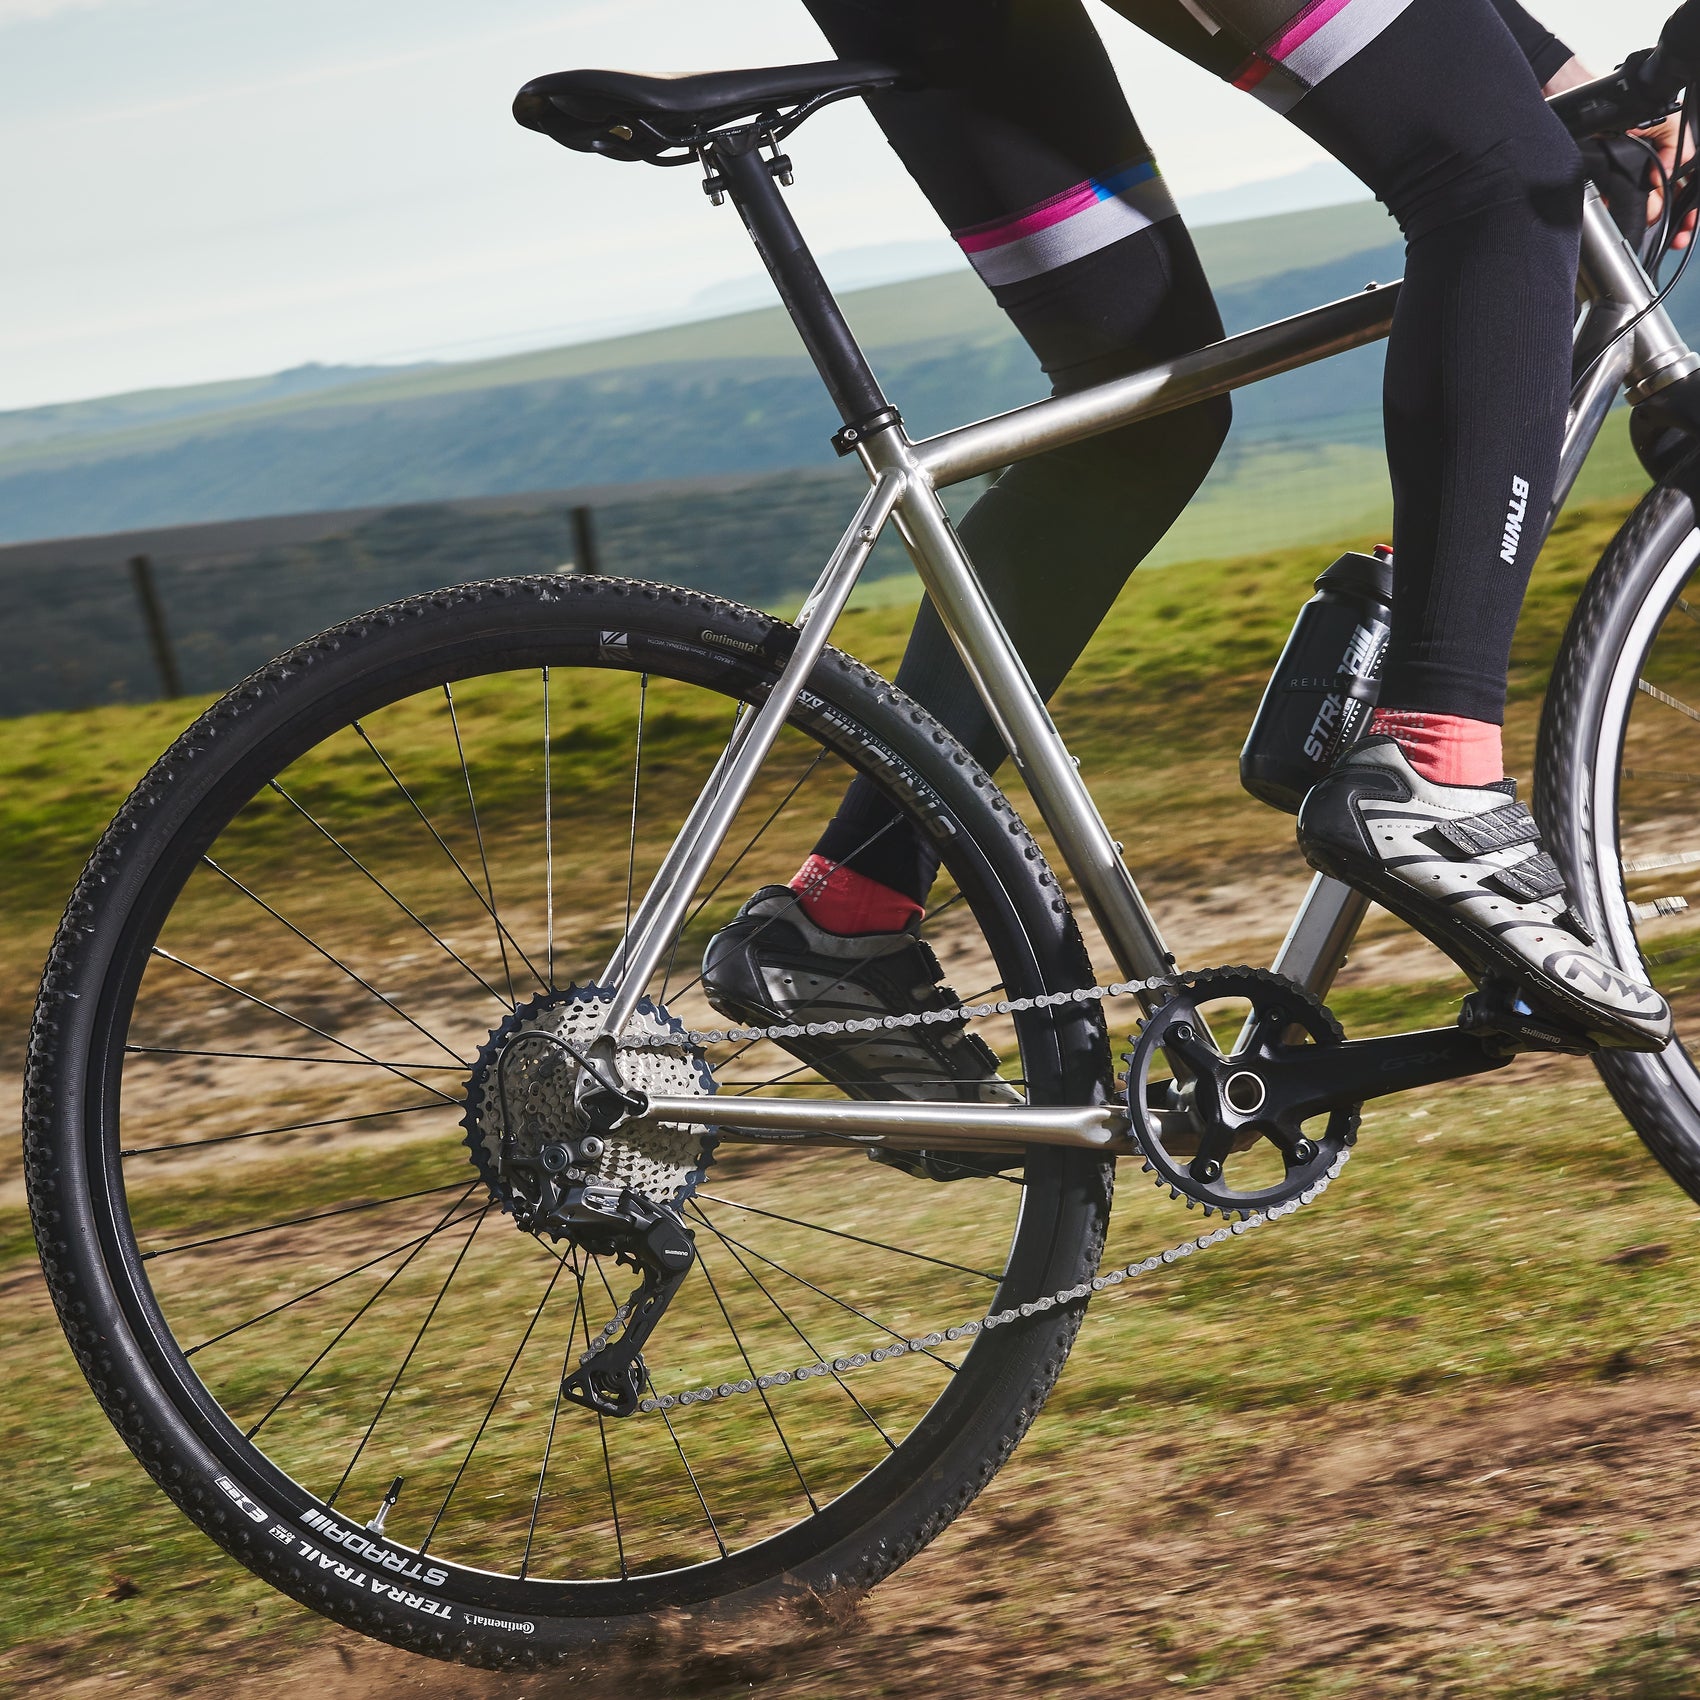 Back wheel of titanium bike as cyclist rides uphill